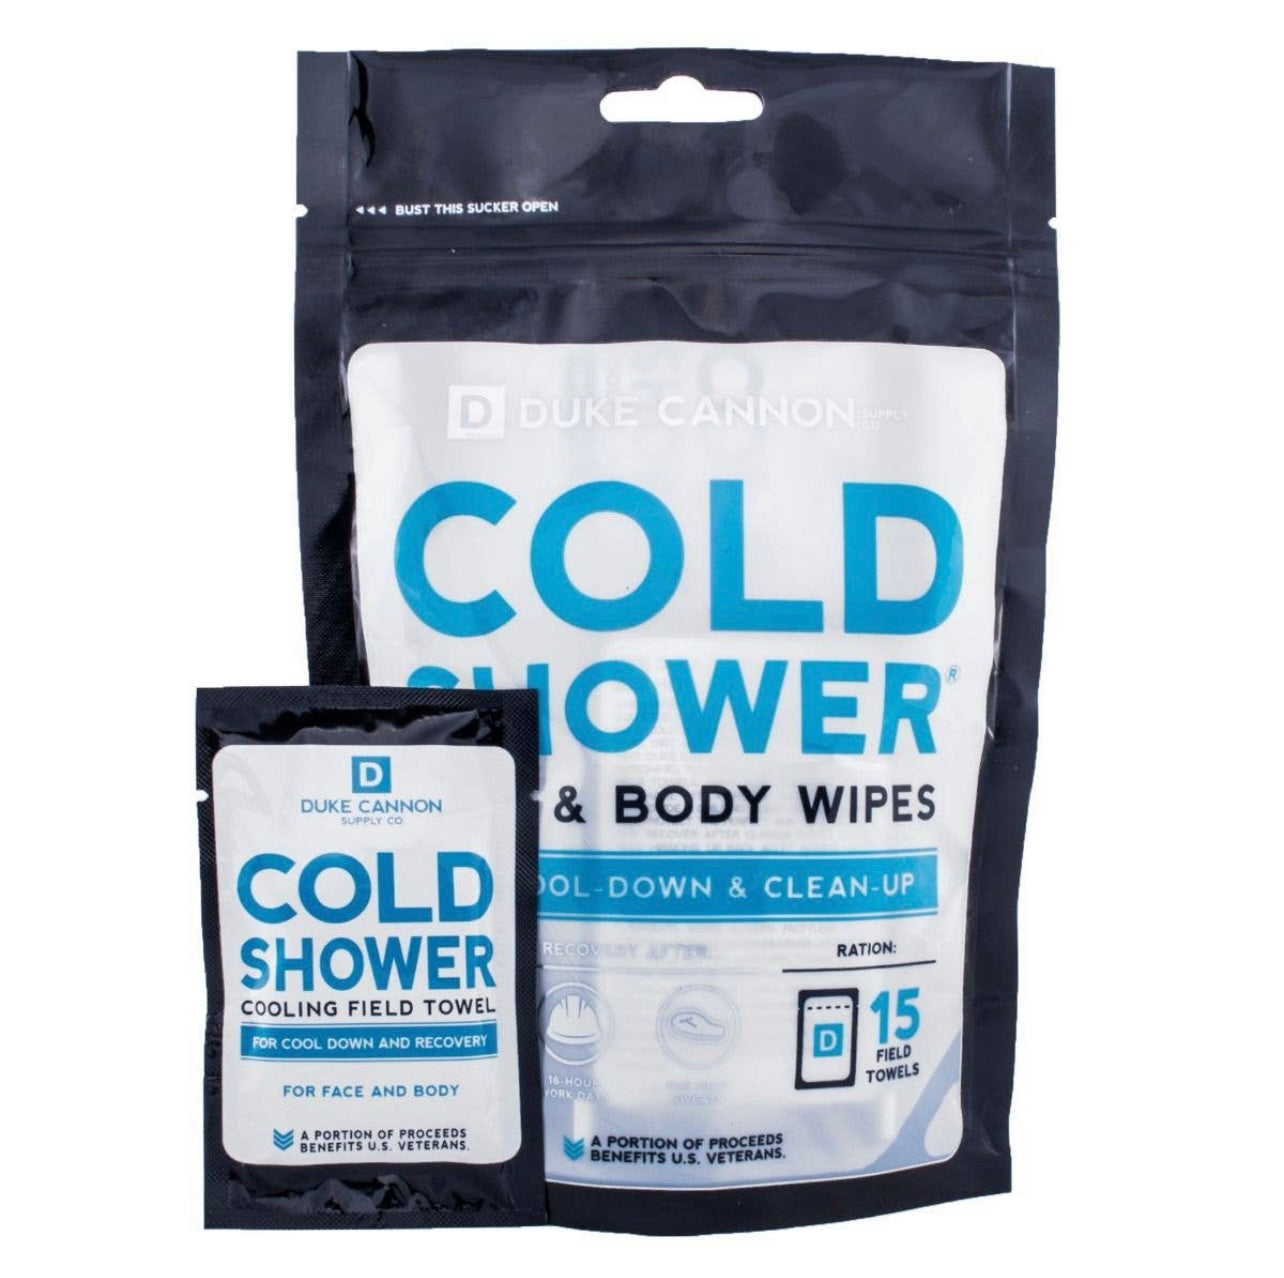 Cold Shower Cooling Towels